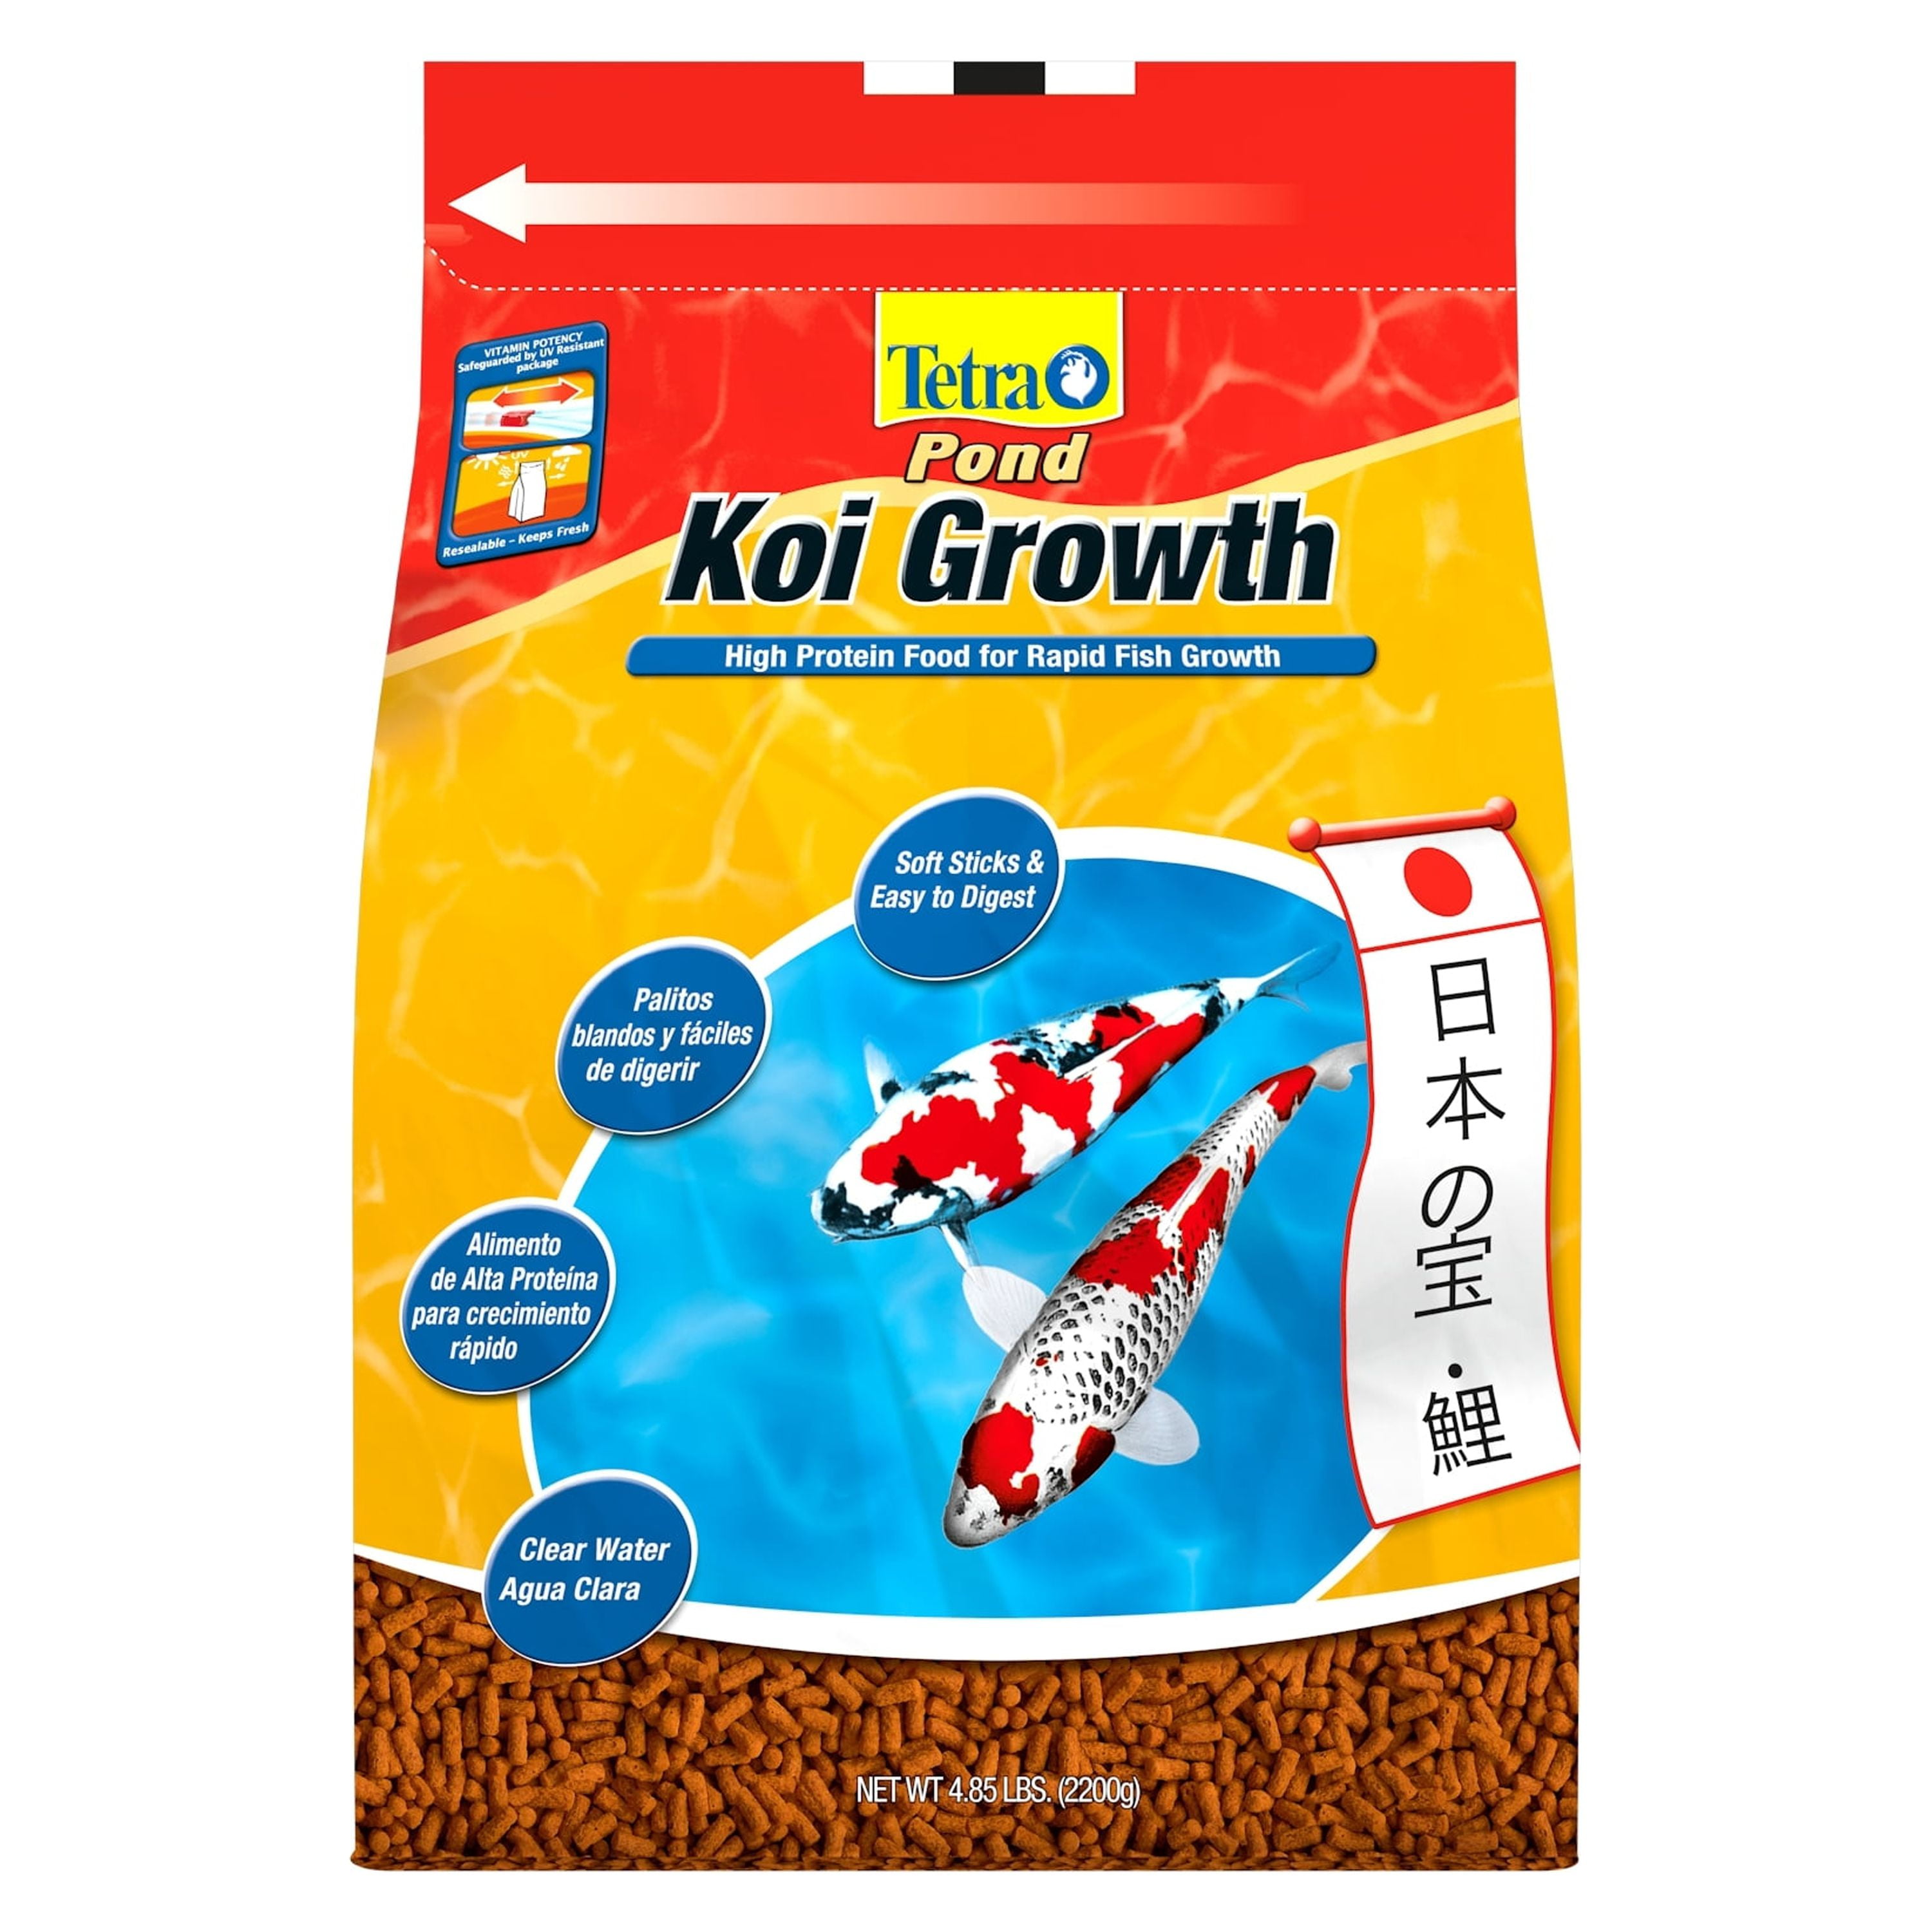 Tetra TetraPond Koi Growth 4.85 Pounds, Soft Sticks, Pond Fish Food 